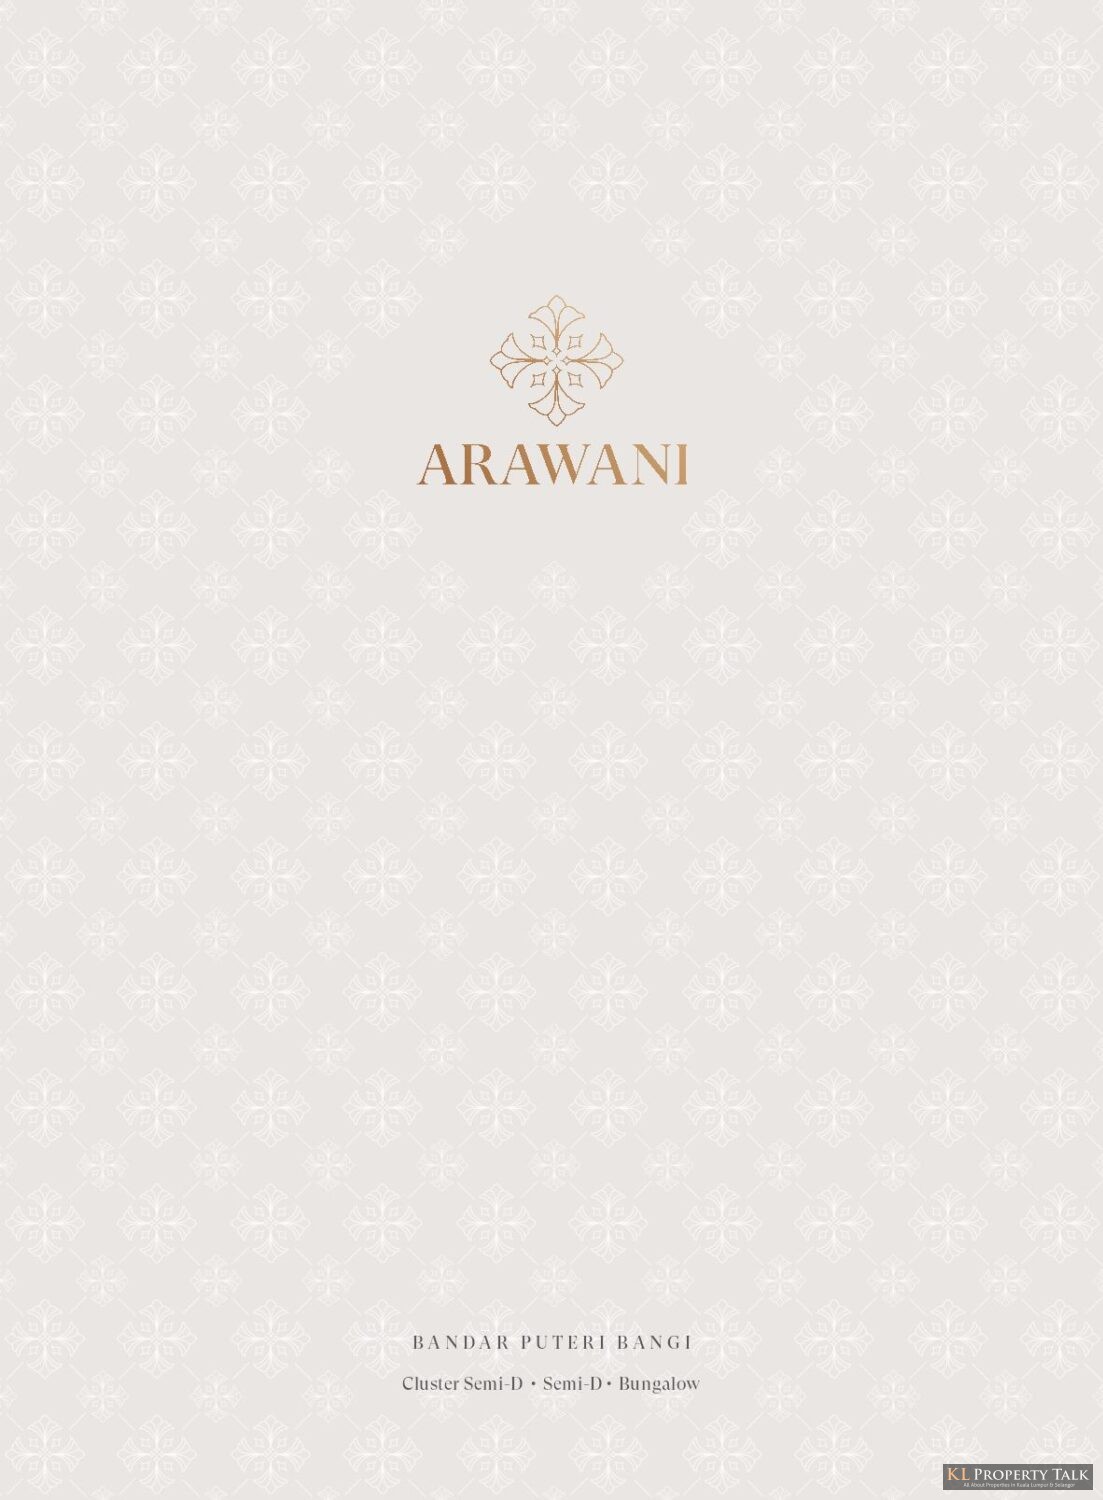 Arawani